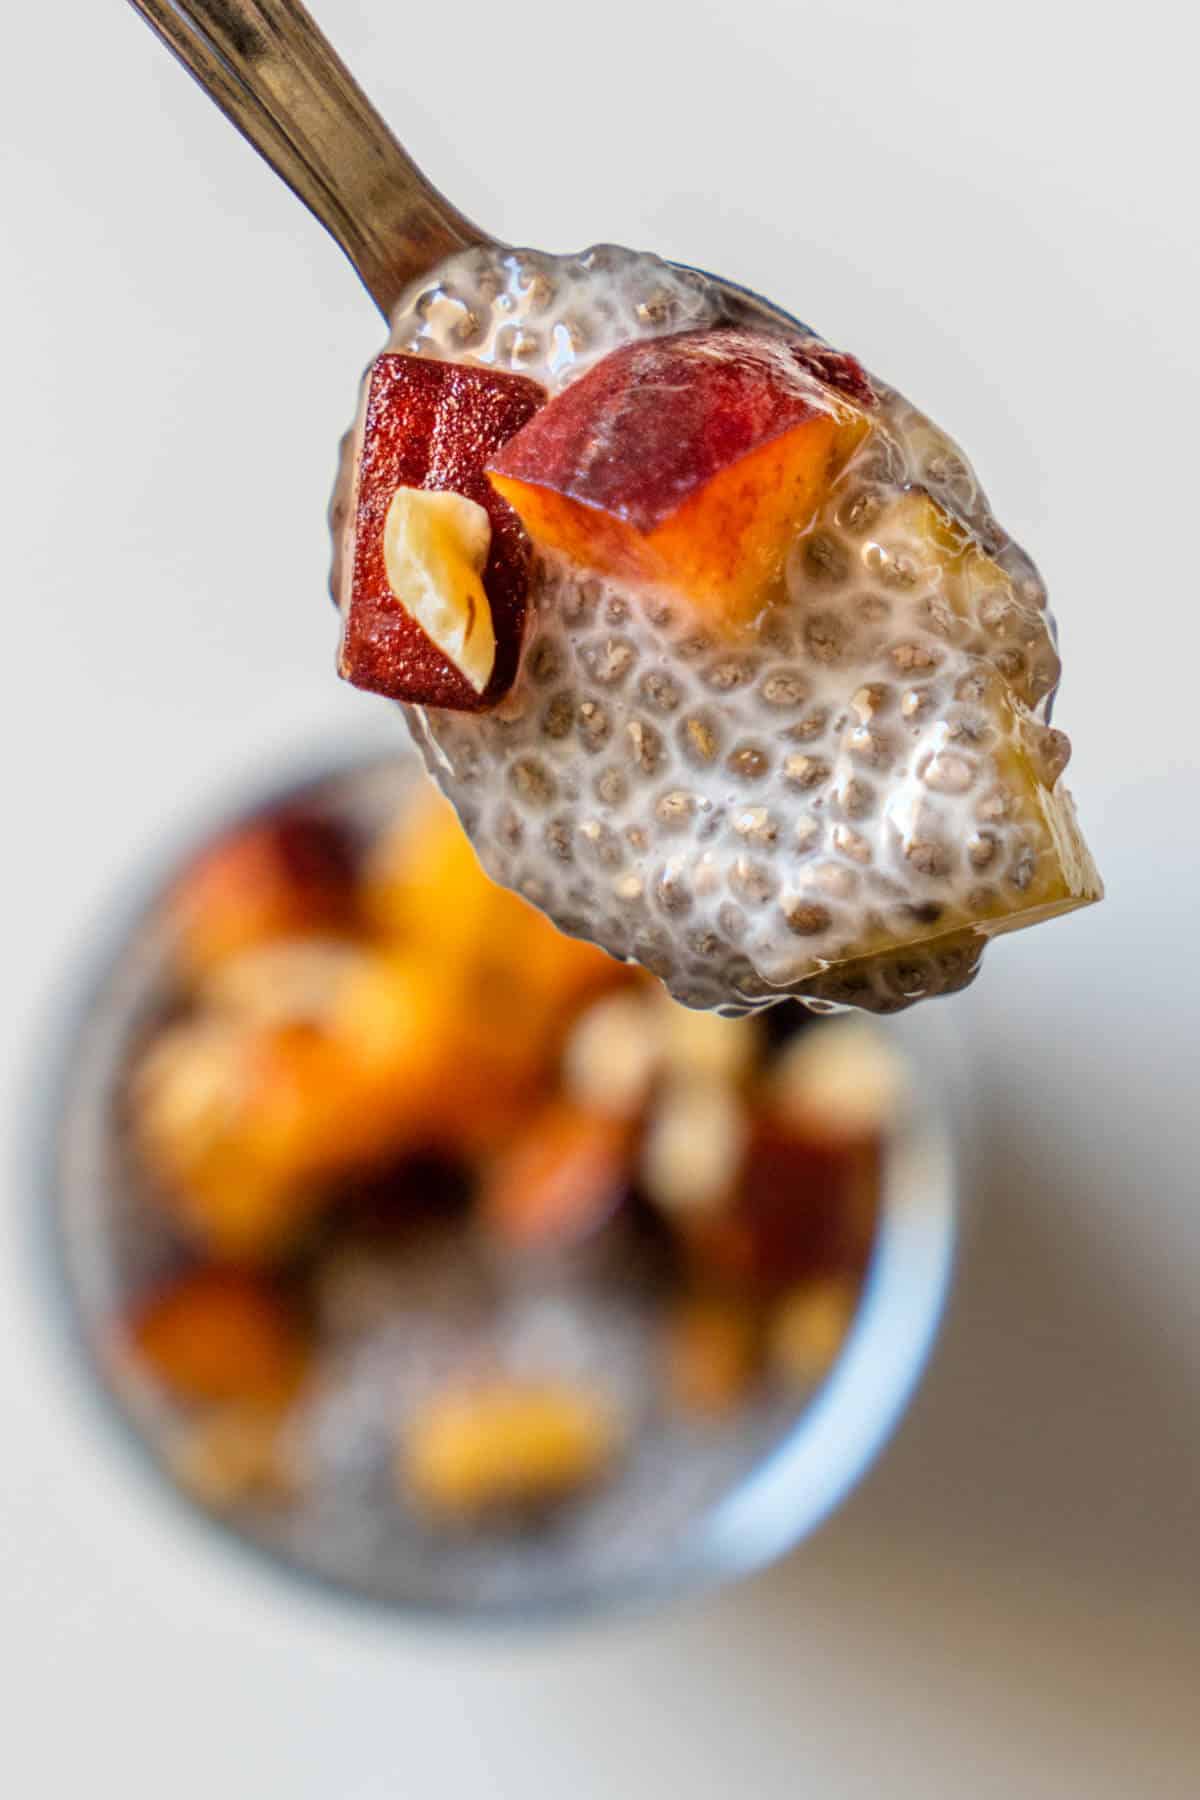 Peach chia pudding on a teaspoon to show creamy texture